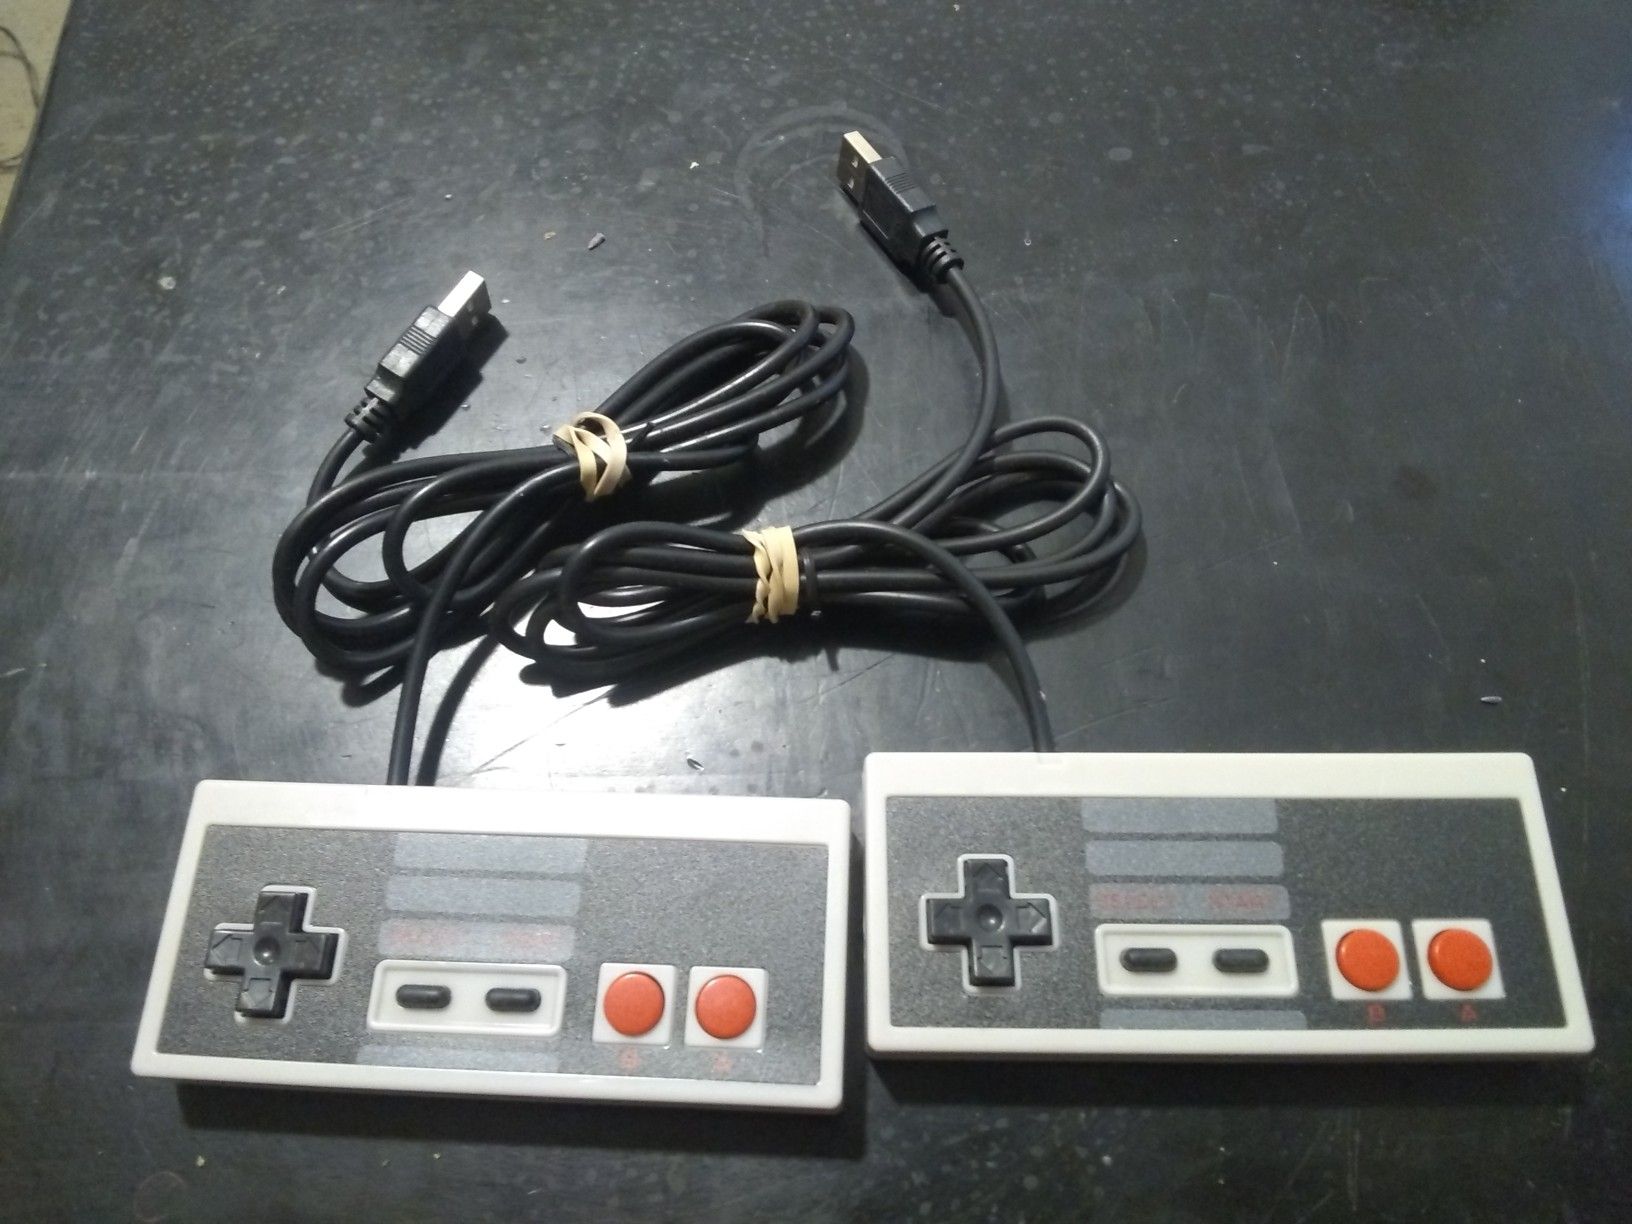 USB Nintendo controllers